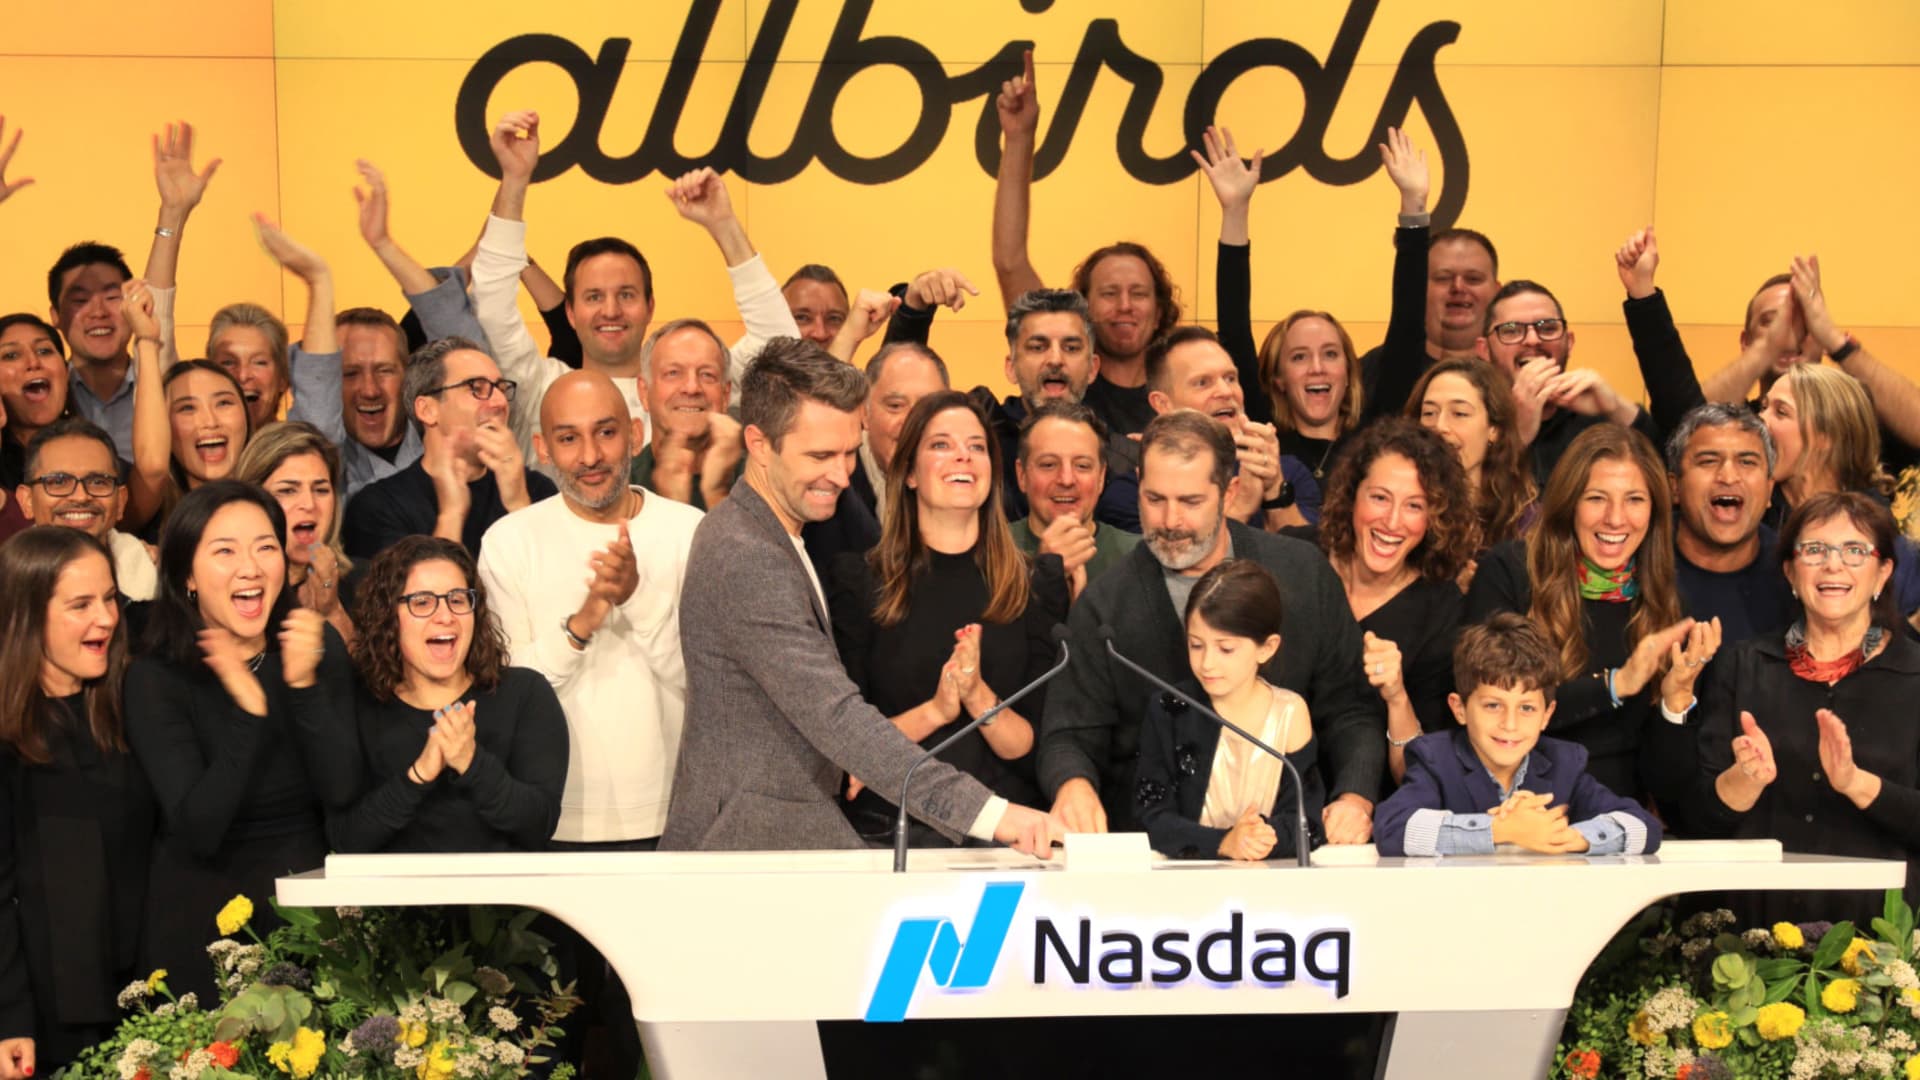 Allbirds IPO at the Nasdaq site, November 3, 2021.